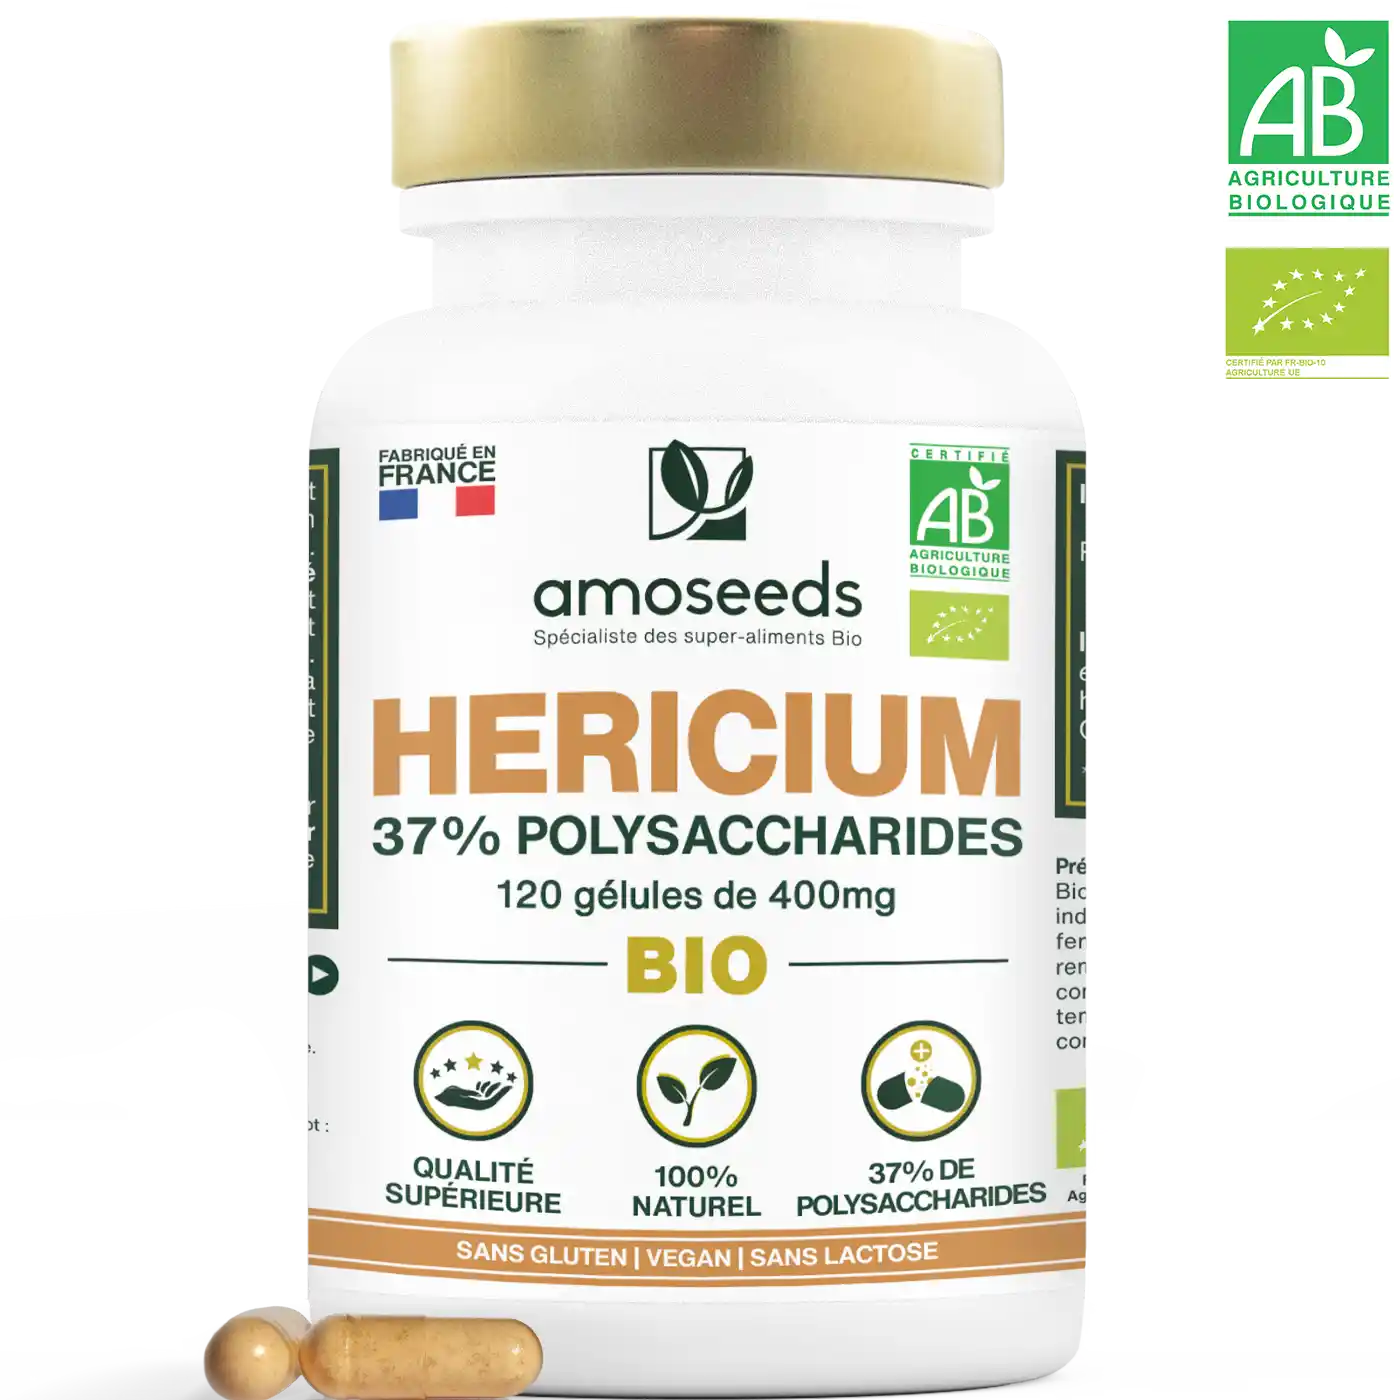 Hericium Bio gelules amoseeds specialiste superaliments bio;